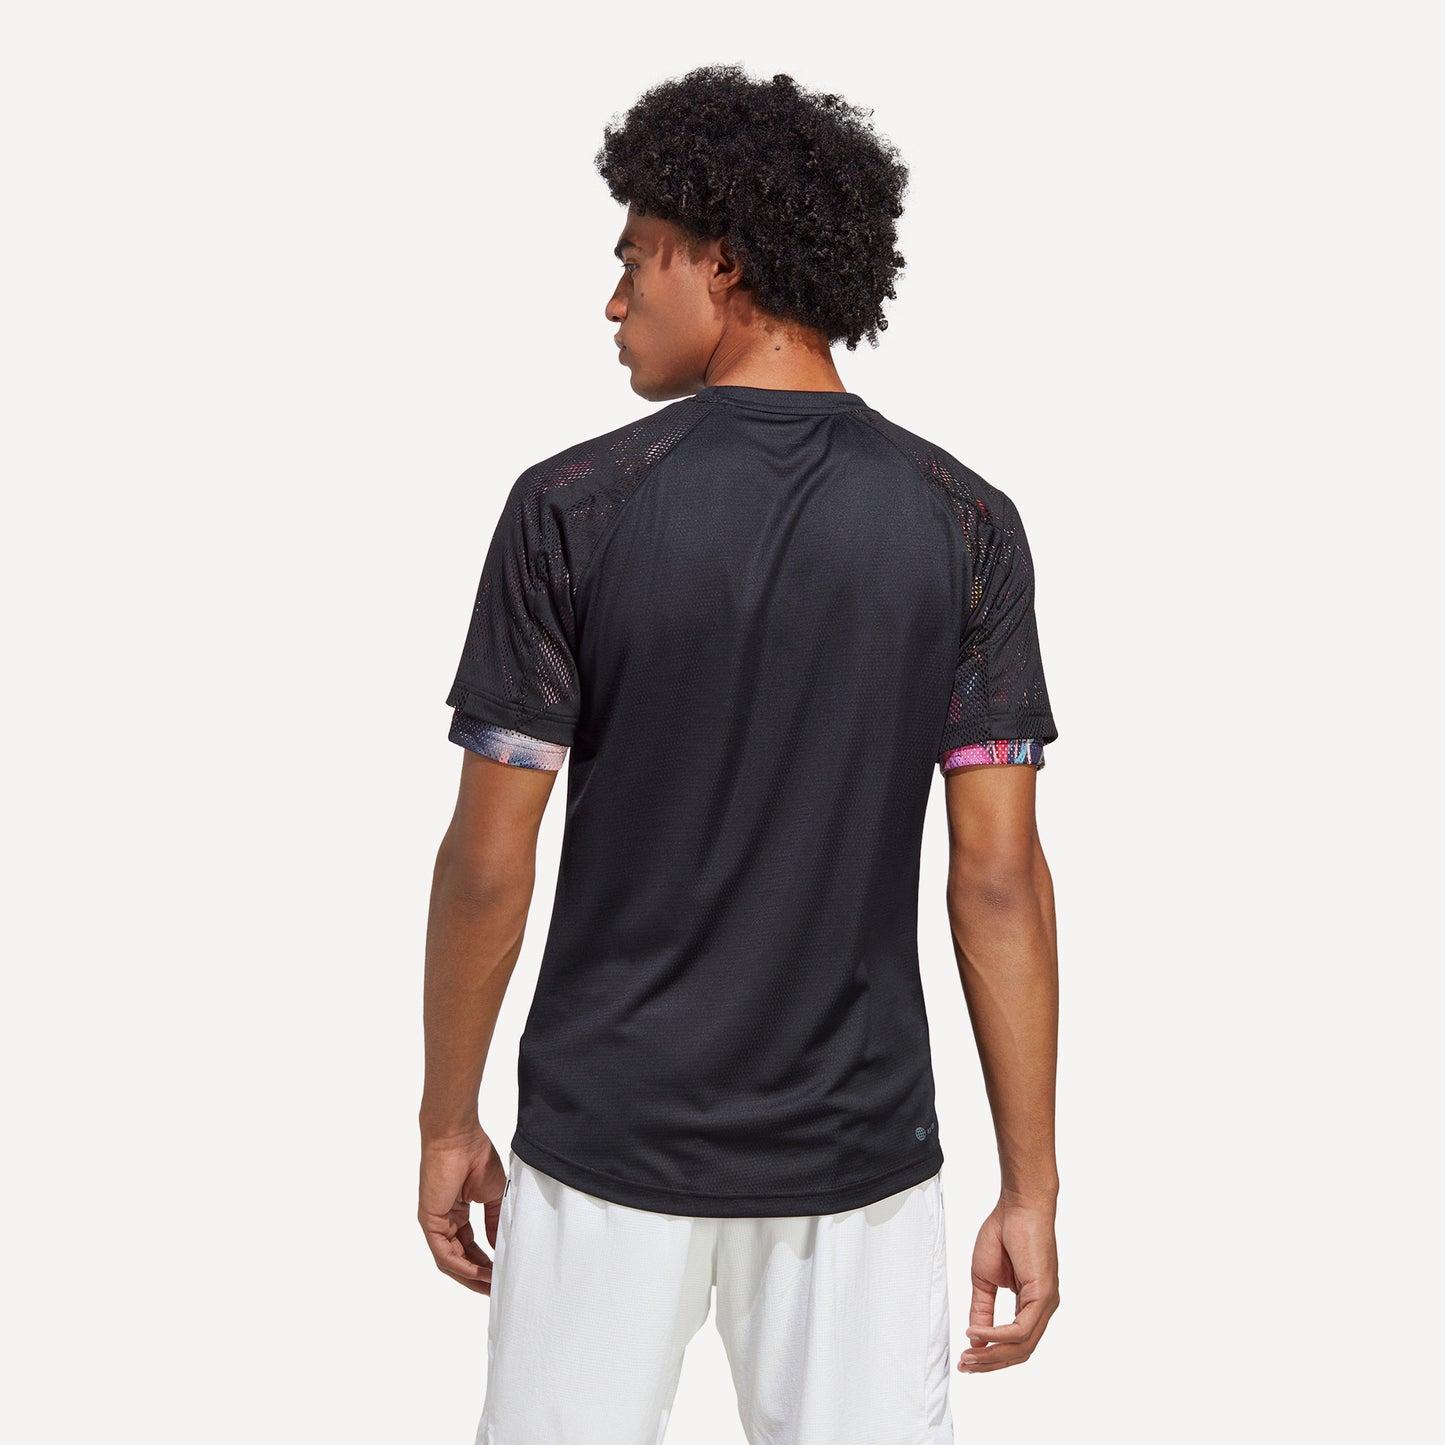 adidas Melbourne Ergo Heat Ready Men's Tennis Shirt Black (2)